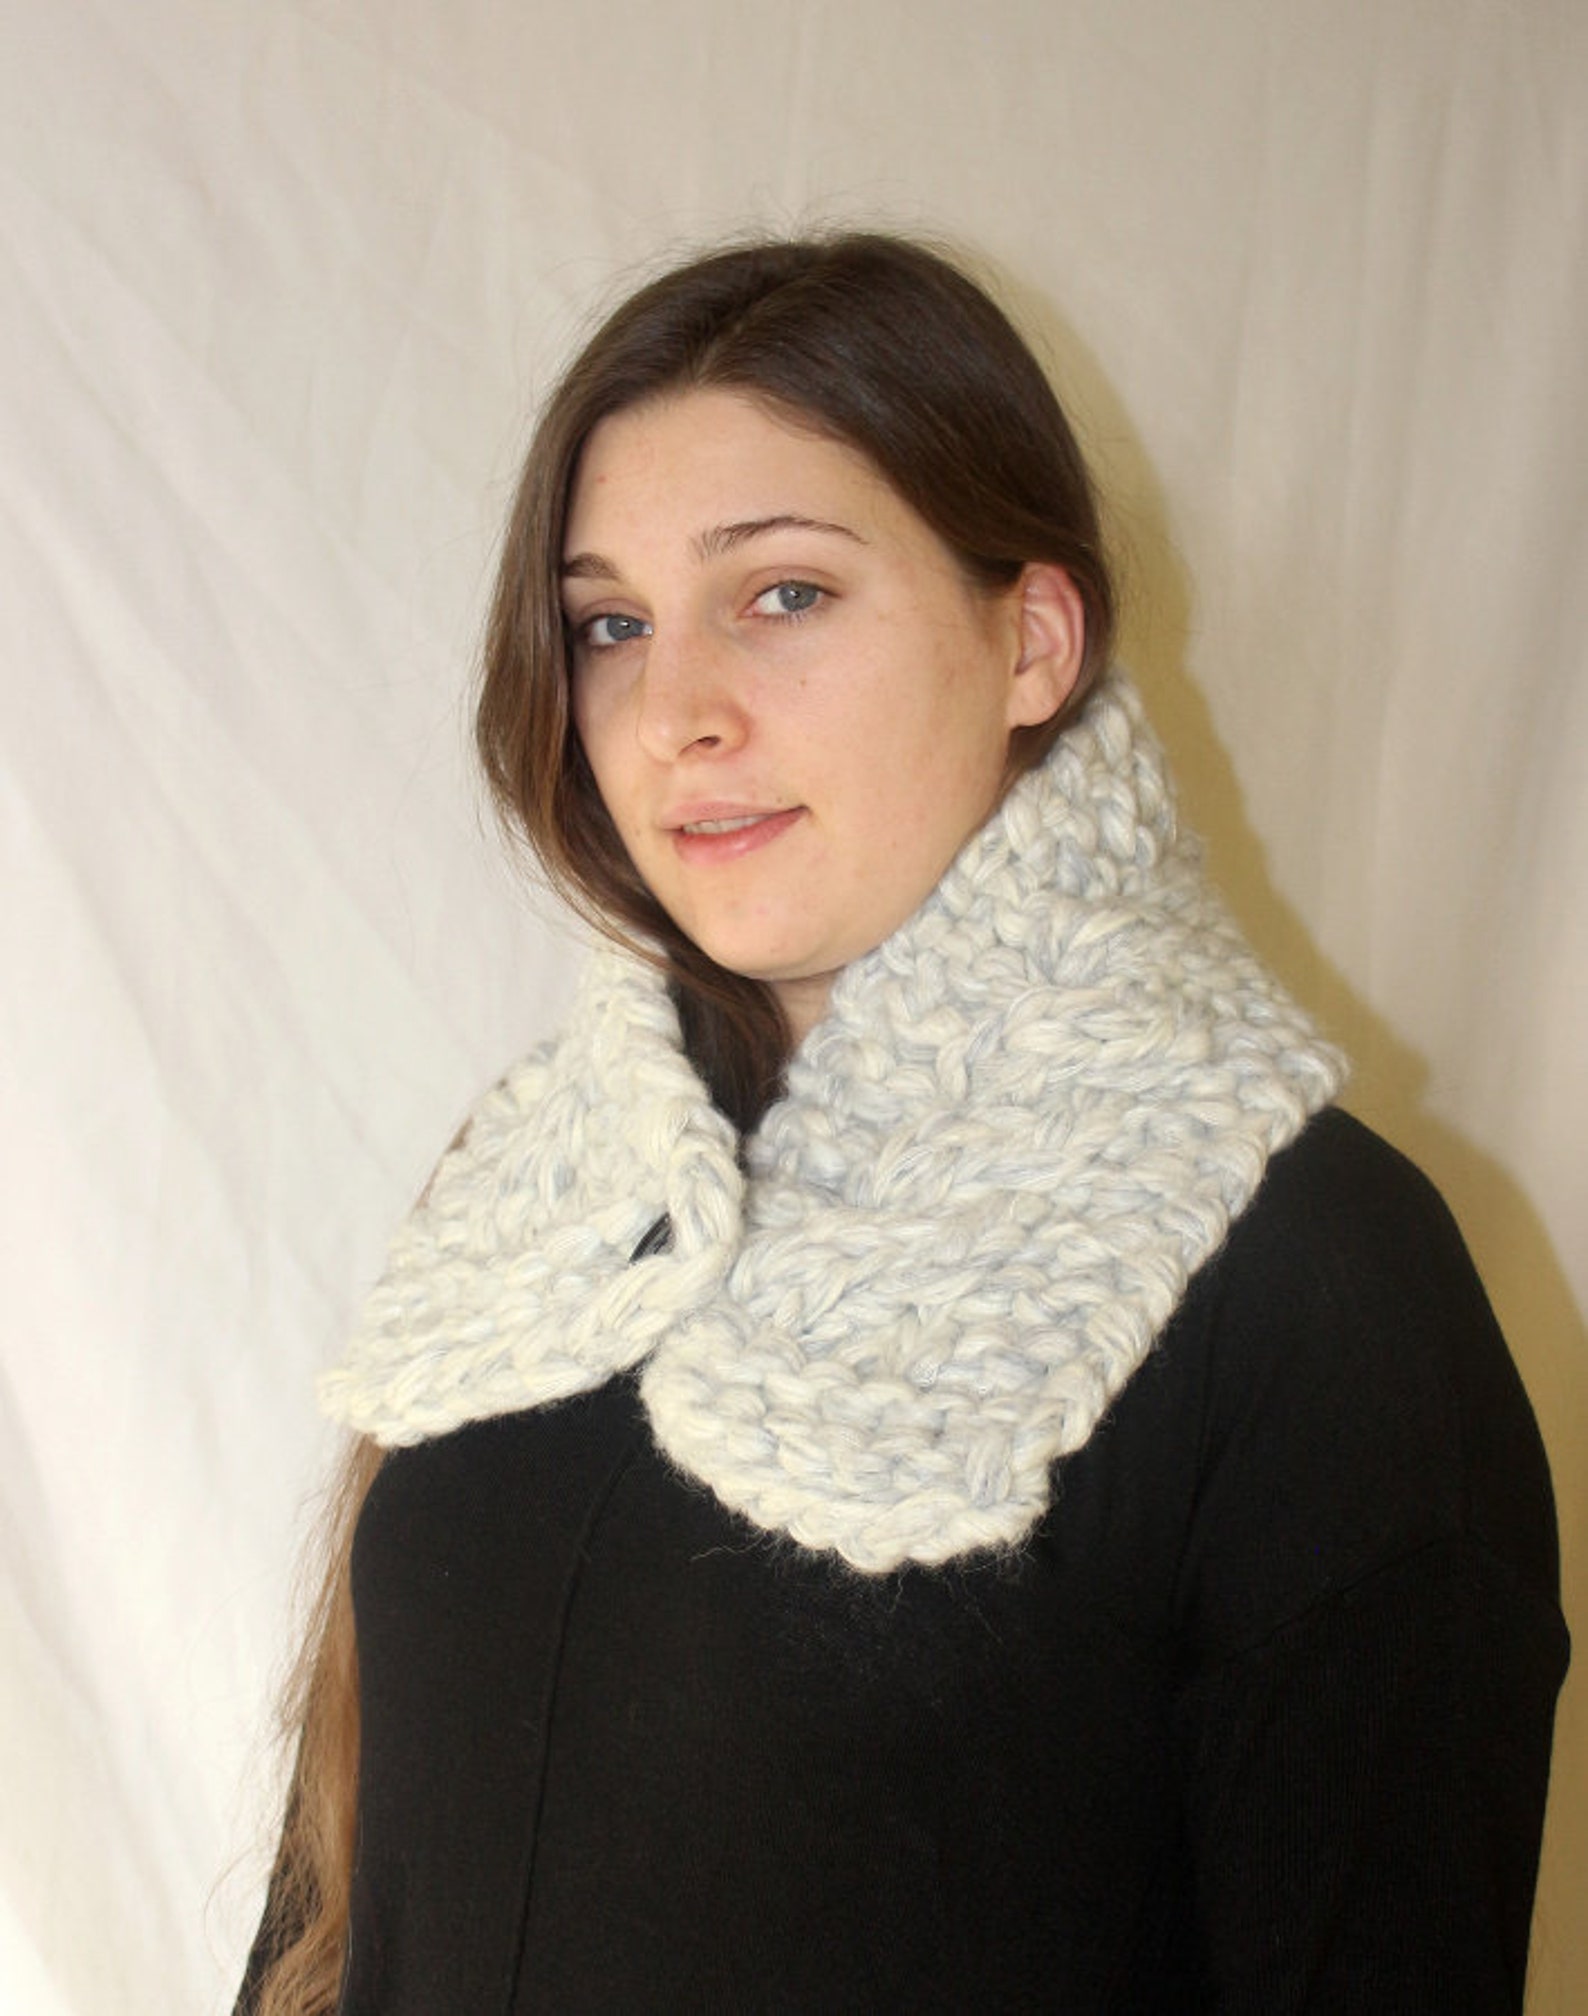 Wool Collar Neck warmthAlpaka Mohair Wool Mix knitted ruff | Etsy